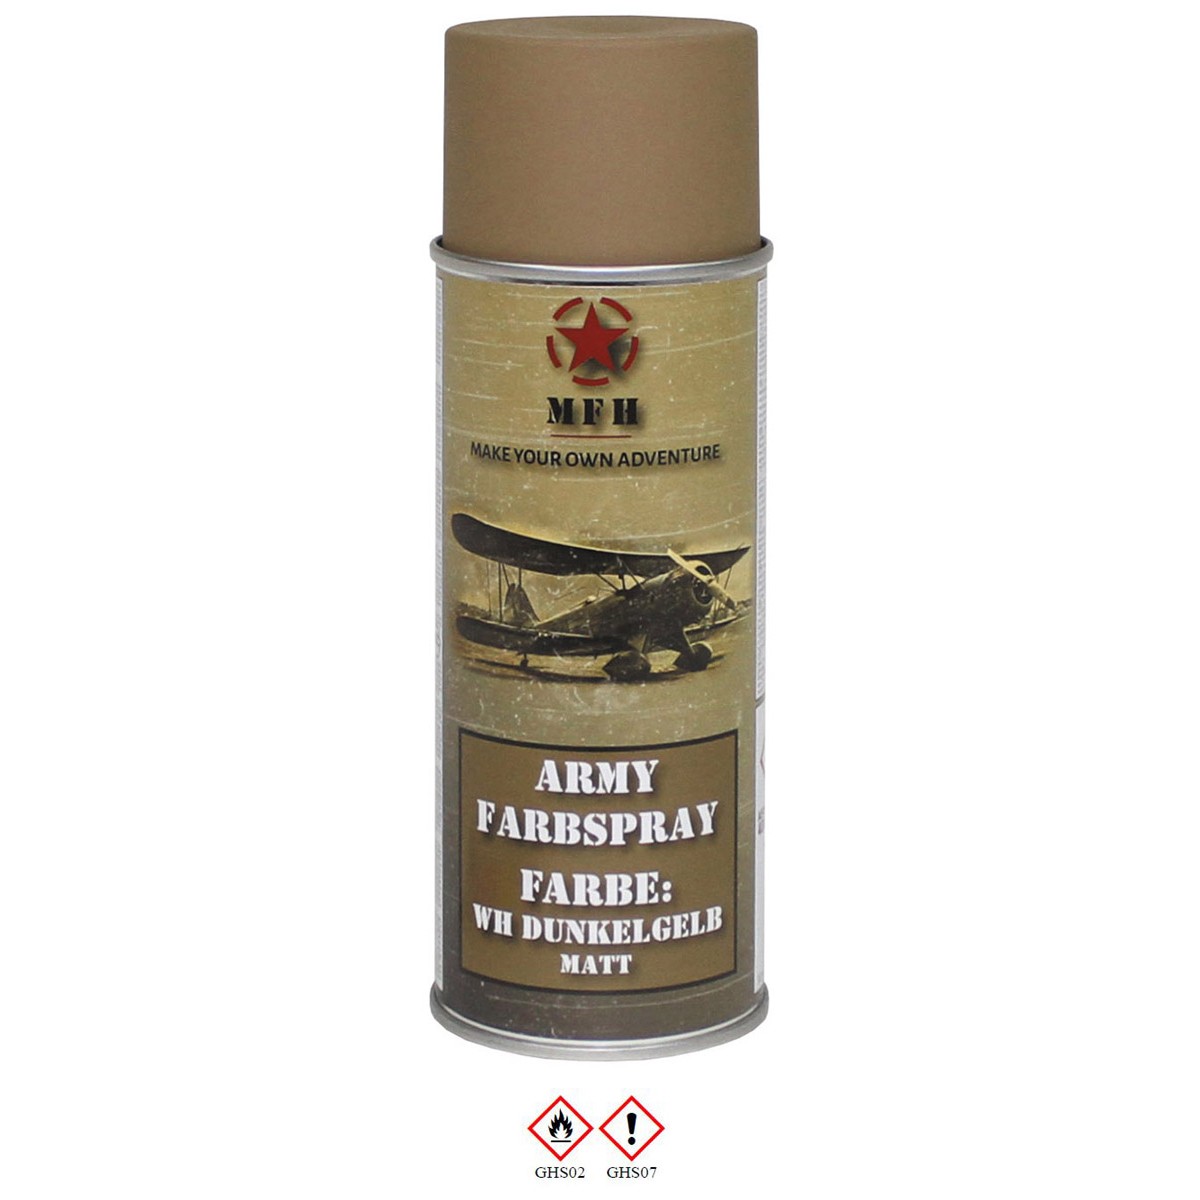 Farbspray, "Army" WH DUNKELGELB, matt, 400 ml